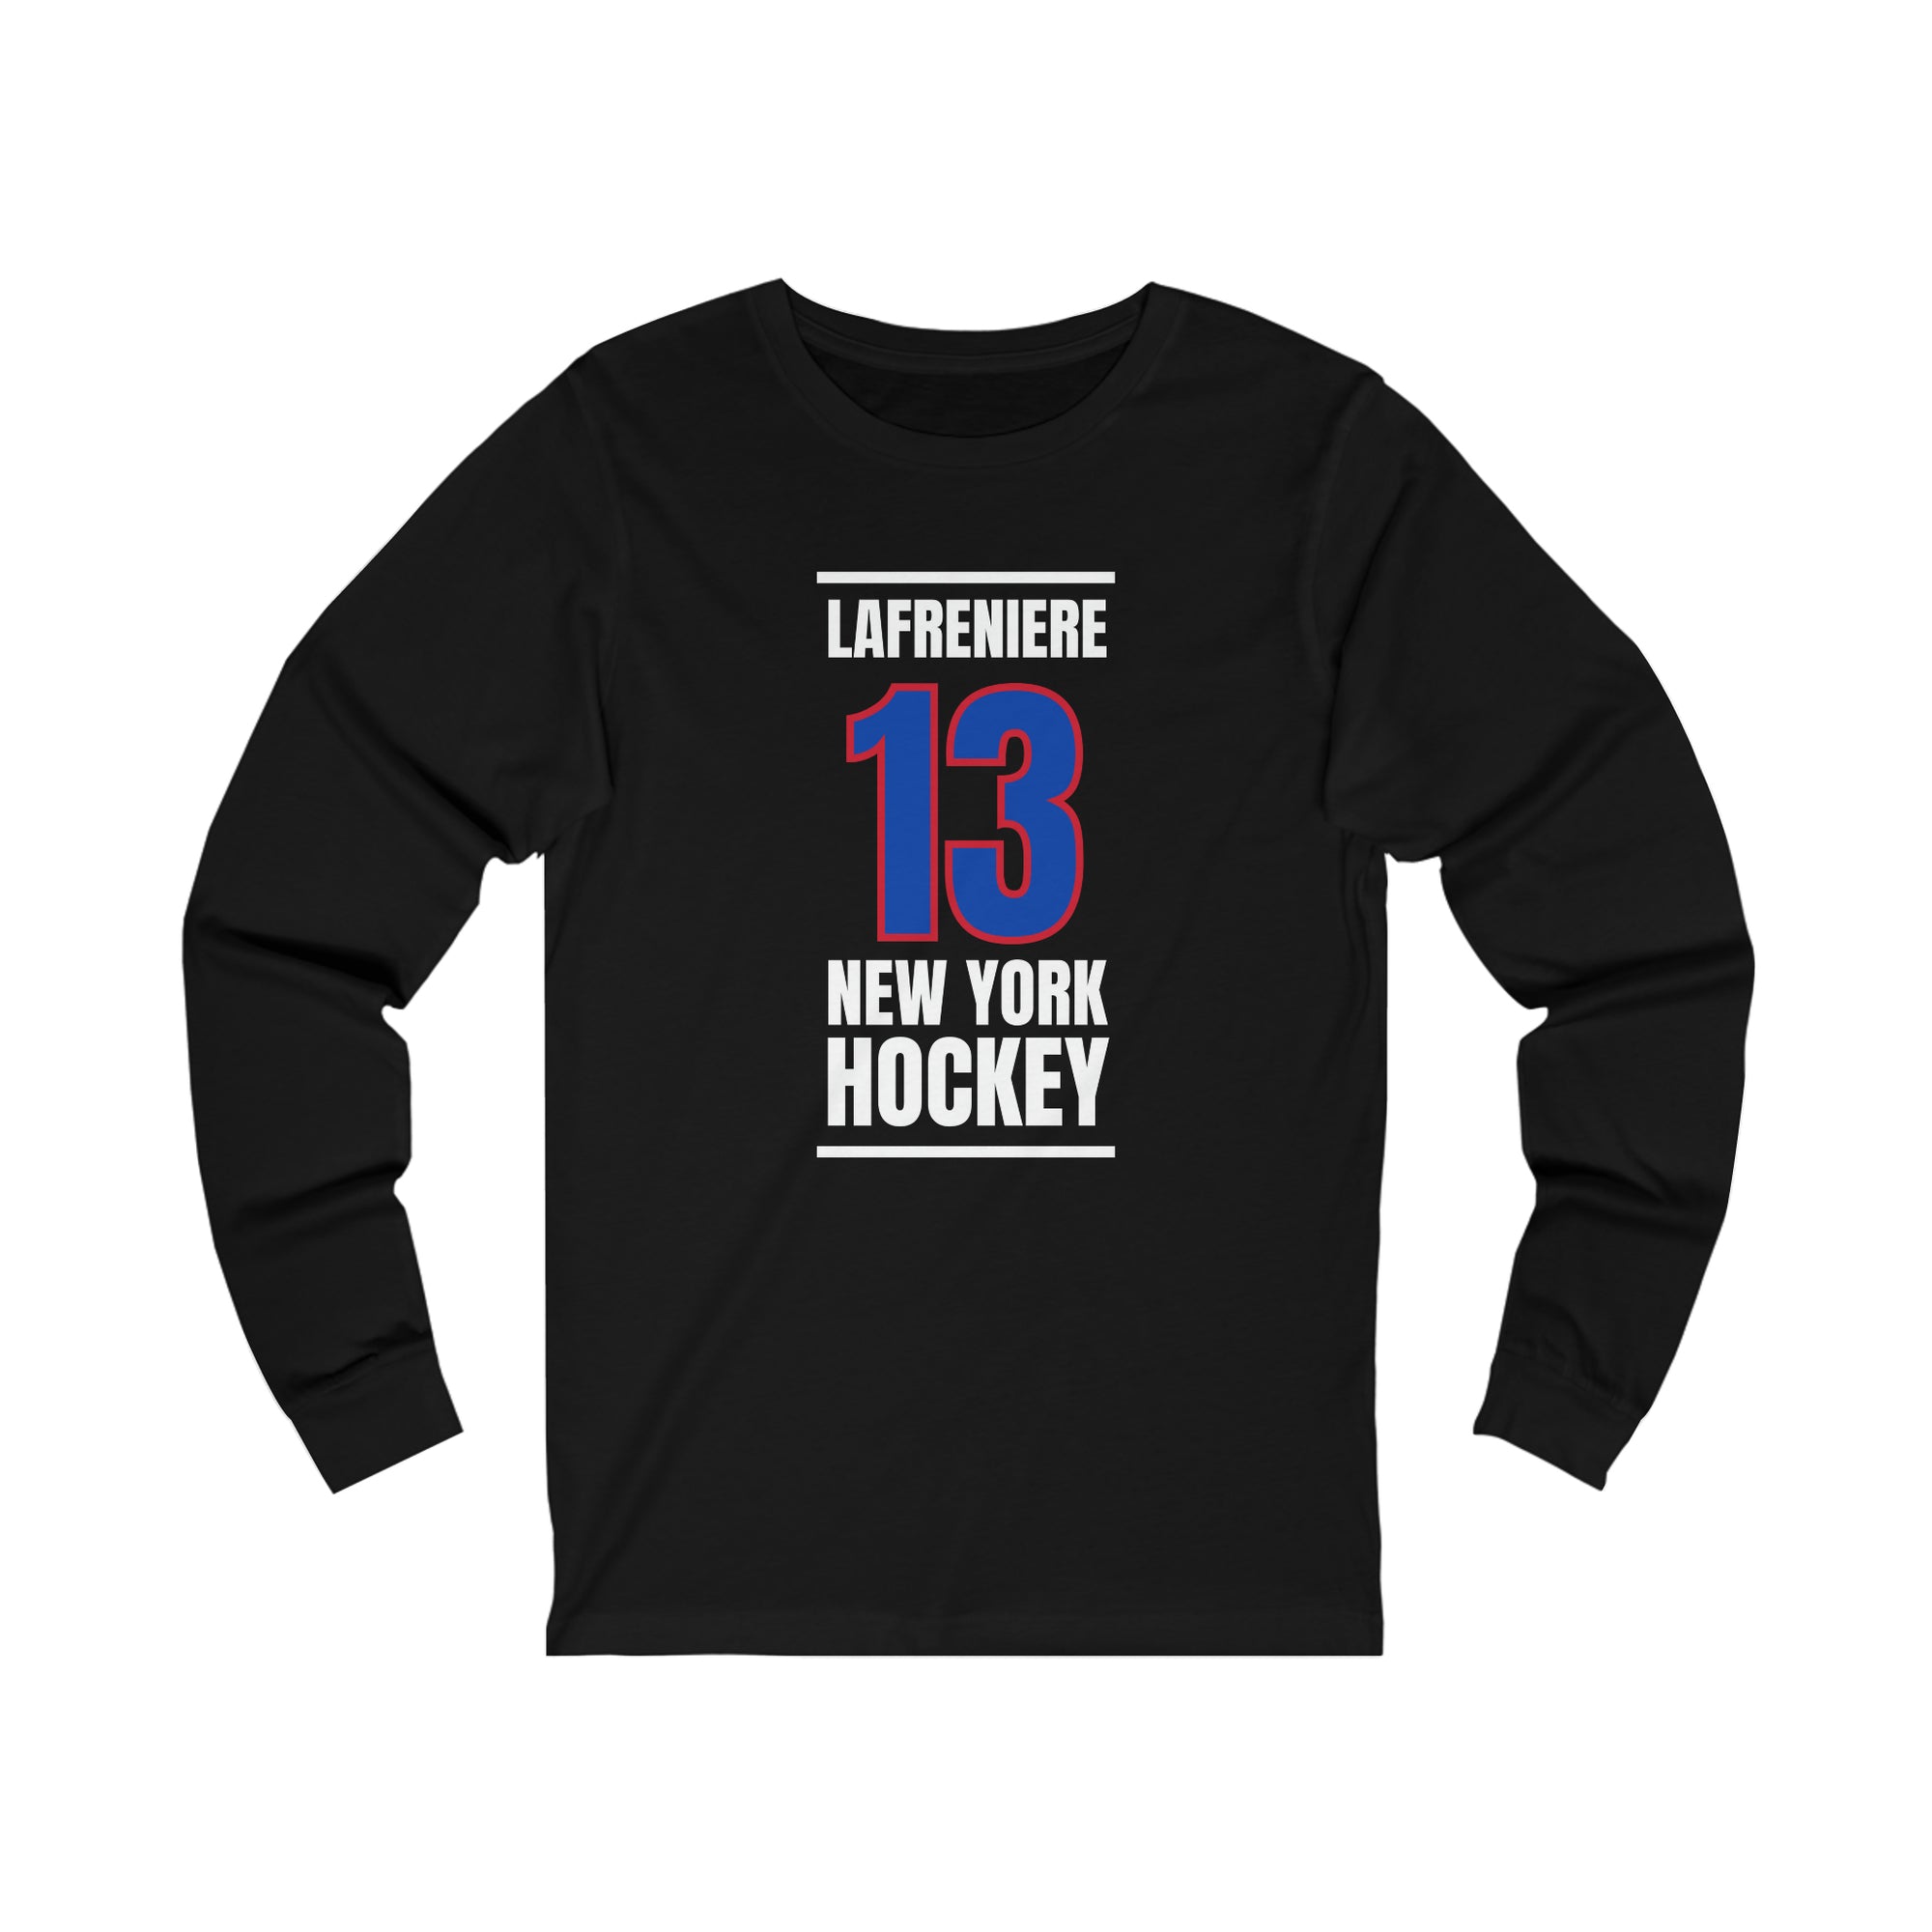 Lafreniere 13 New York Hockey Royal Blue Vertical Design Unisex Jersey Long Sleeve Shirt